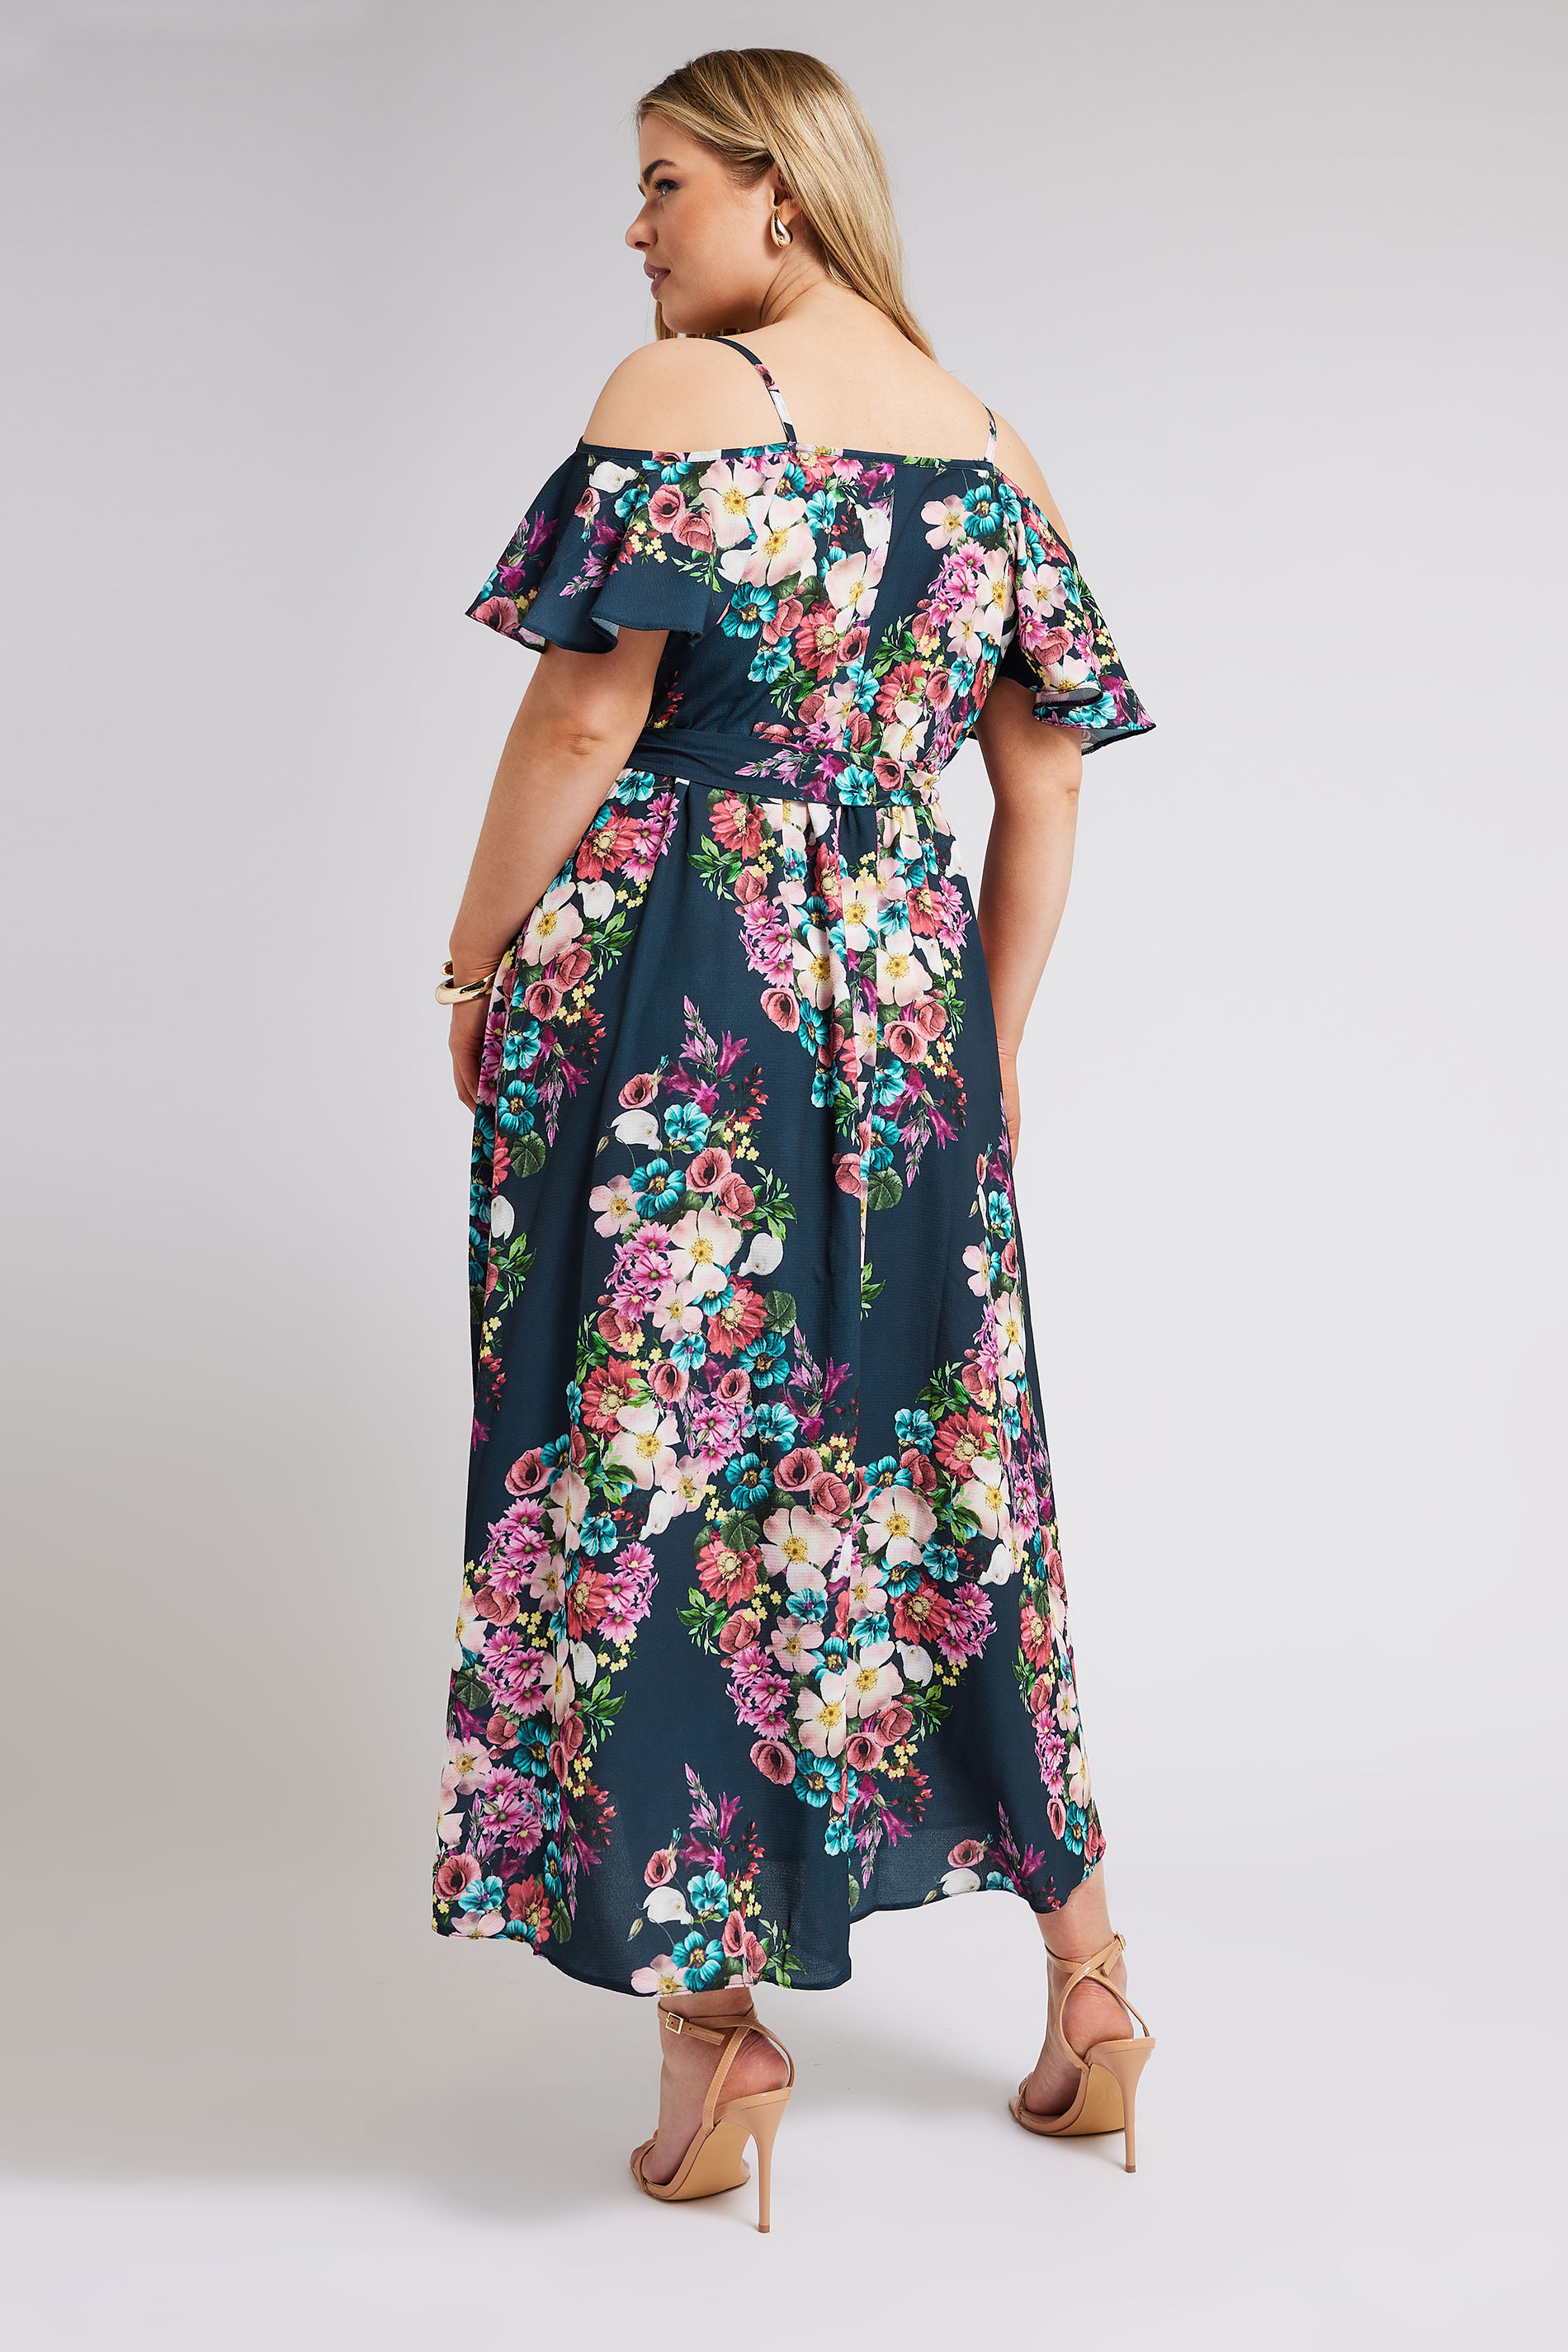 YOURS LONDON Plus Size Blue Floral Print Cold Shoulder Wrap Dress | Yours Clothing 3